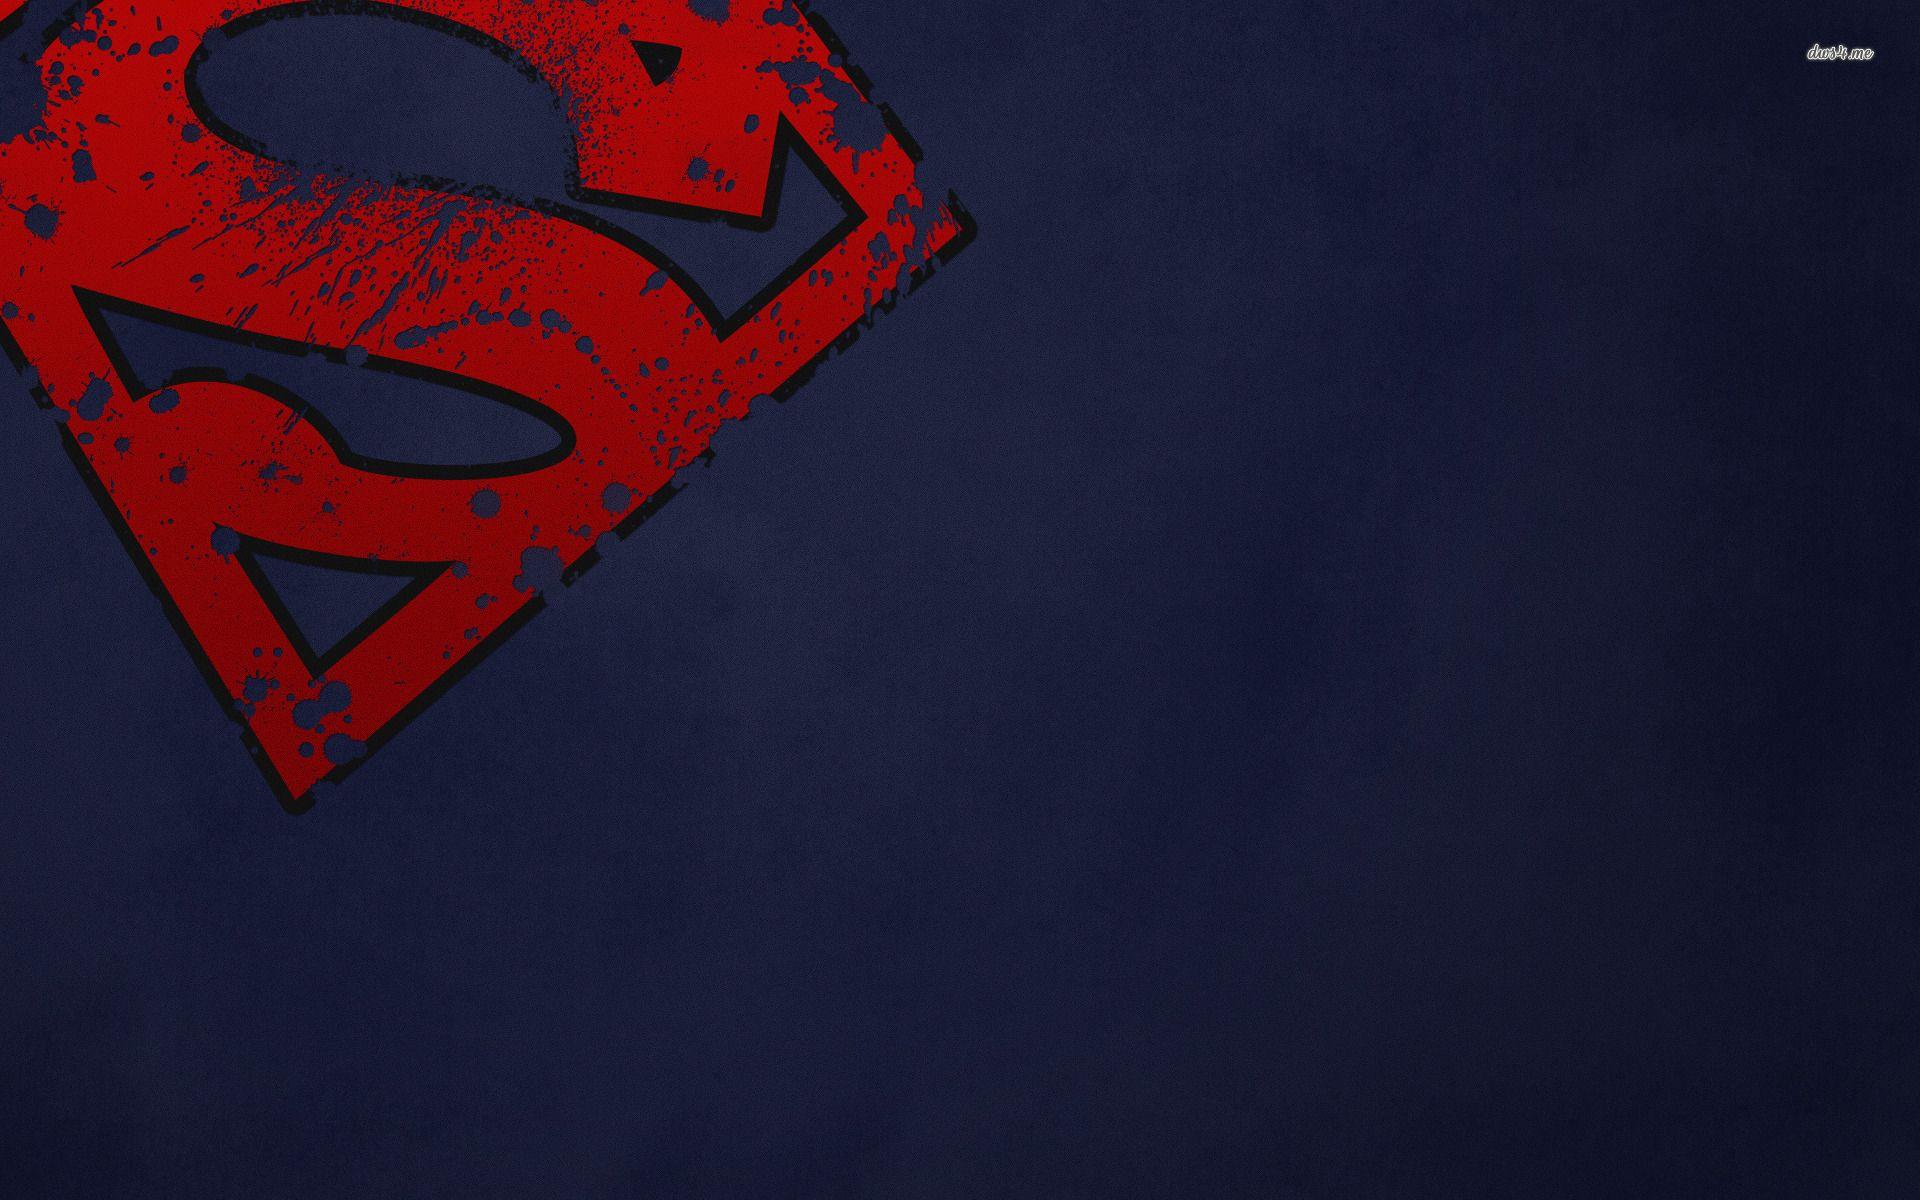 QBT4747: Superman Logo Background In High Quality, BsnSCB